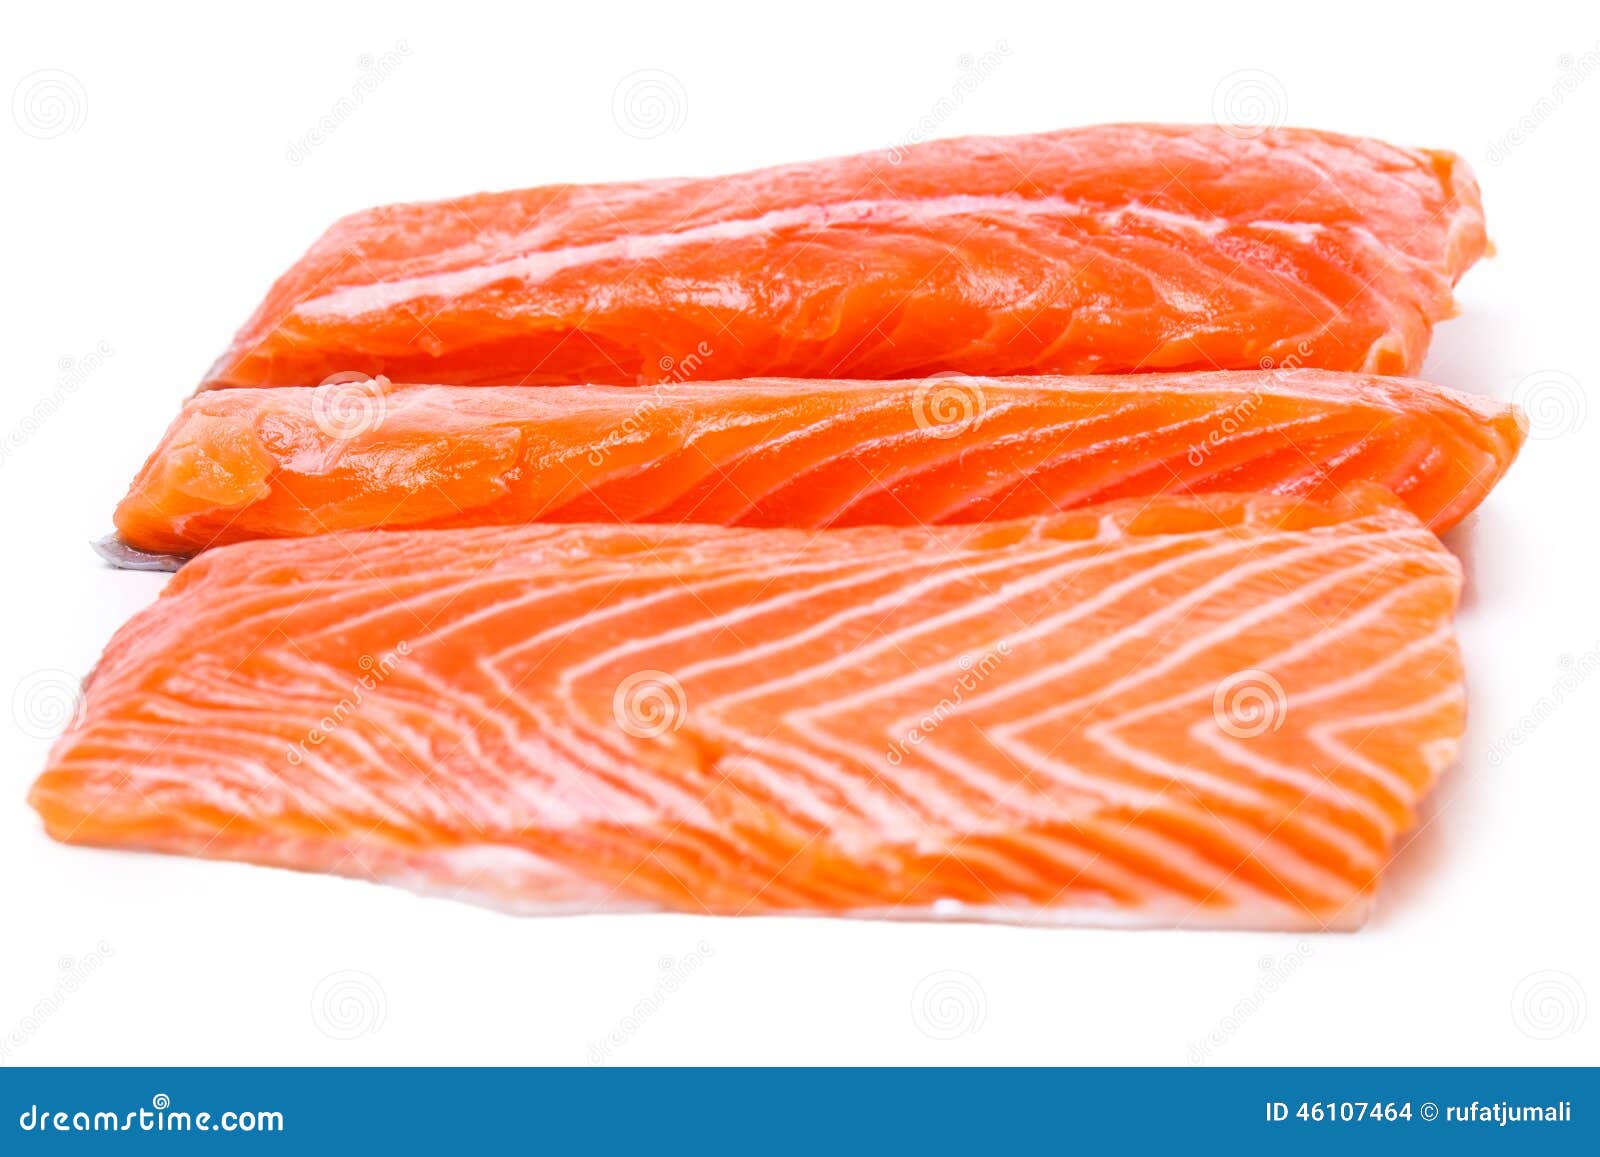 Slice of raw salmon stock photo. Image of healthy, slices - 46107464